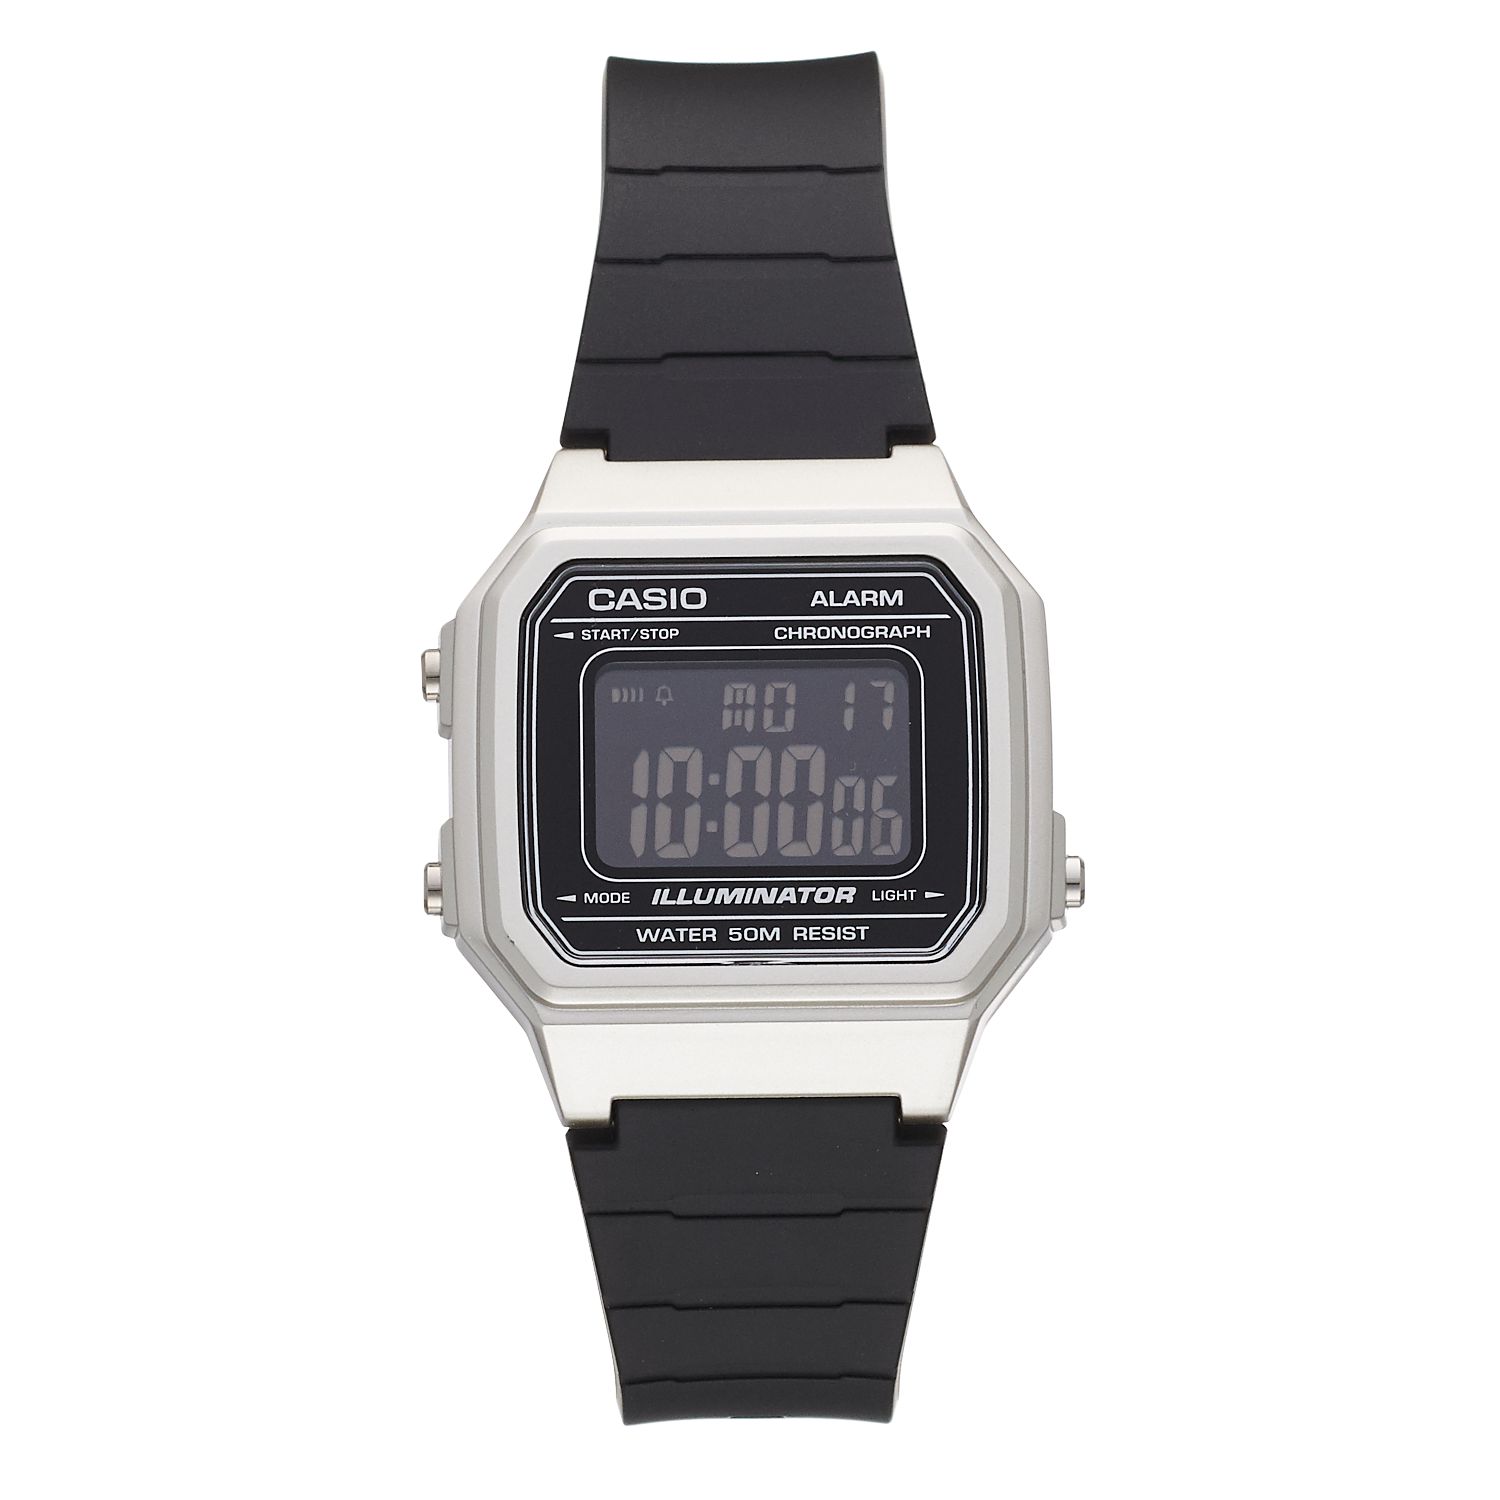 Casio Men's Digital Watch - W217HM